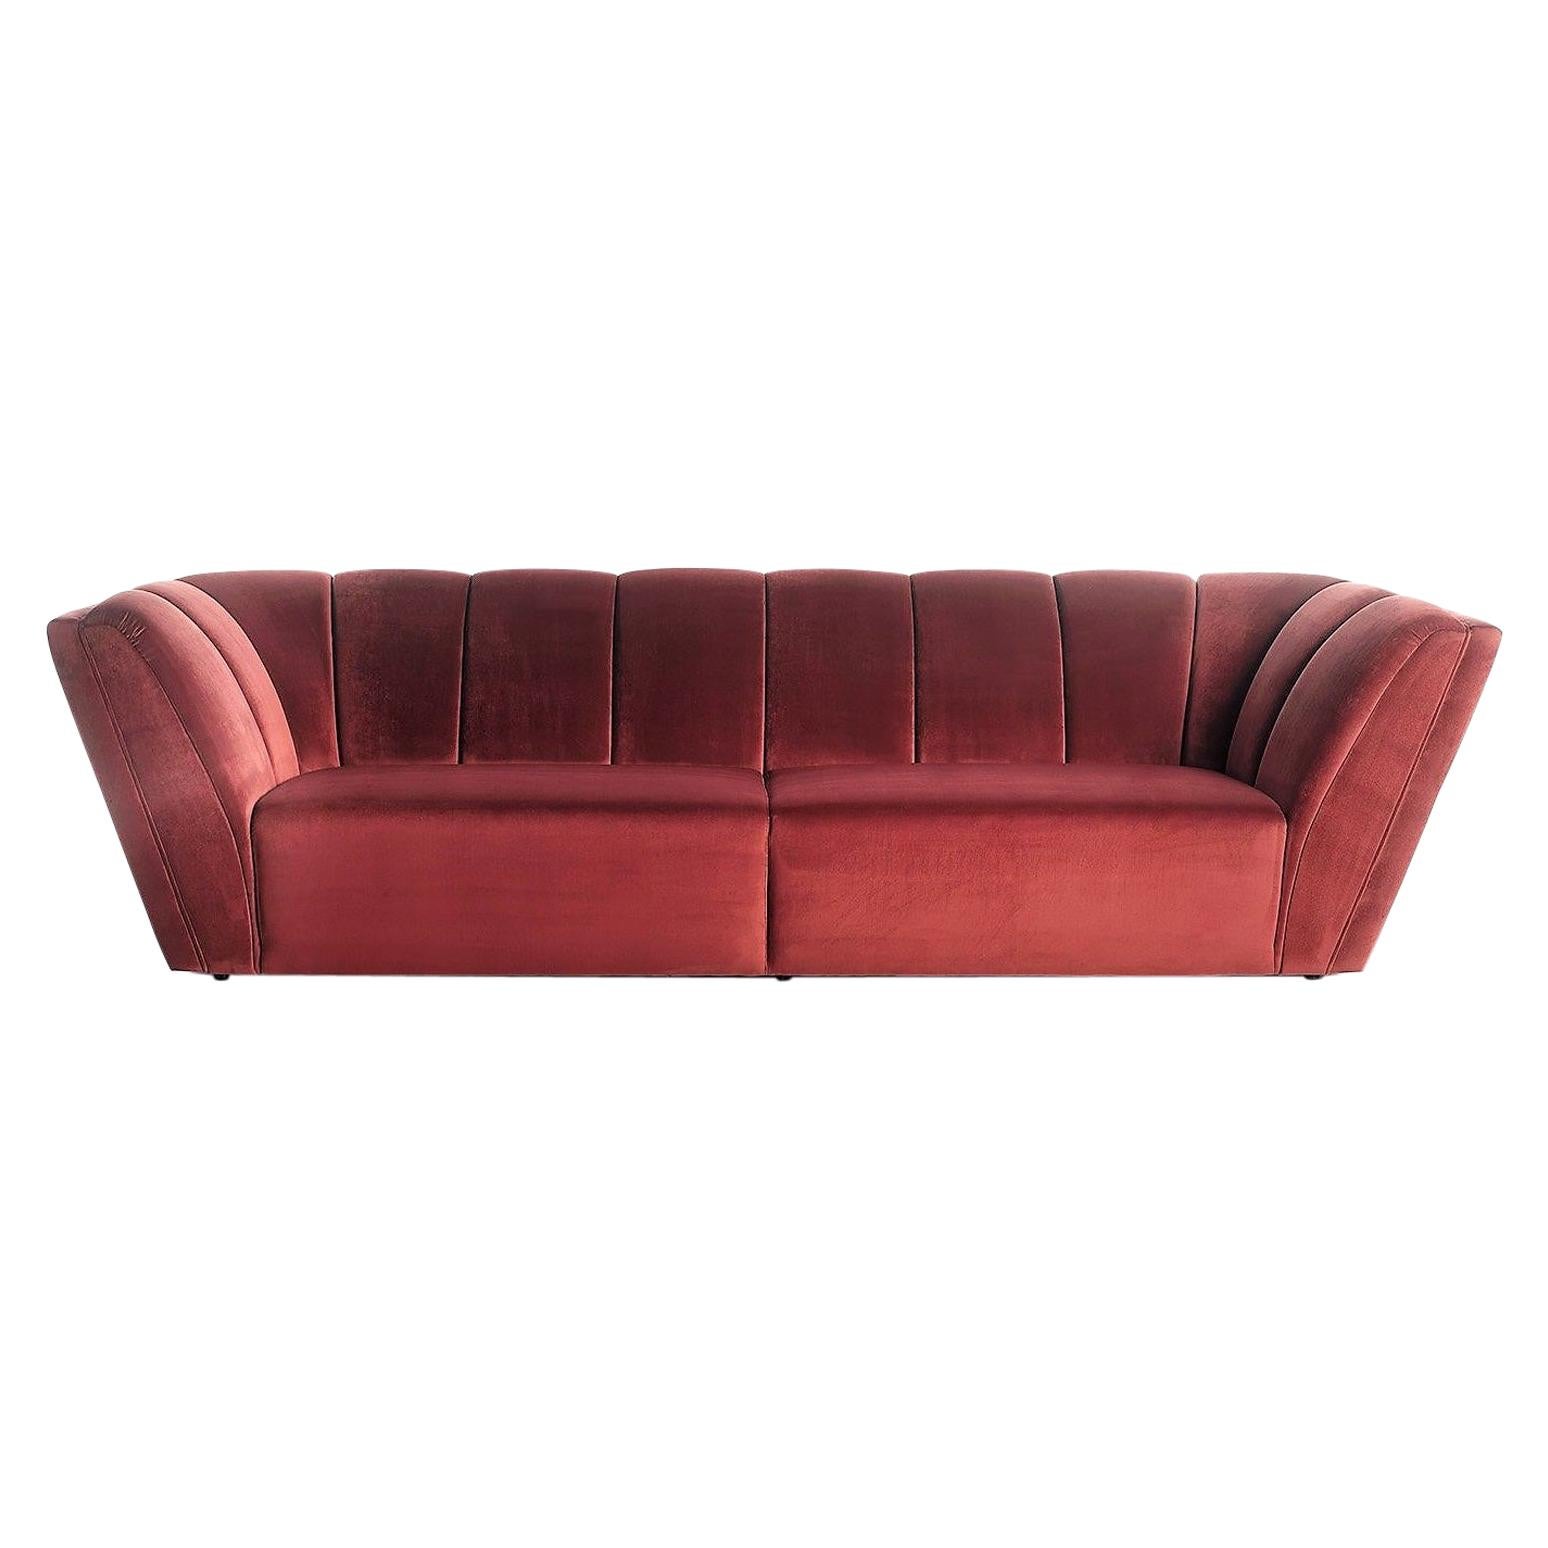 Upholstered Striped Style Sofa In Tai Marsala Smooth Velvet. For Sale